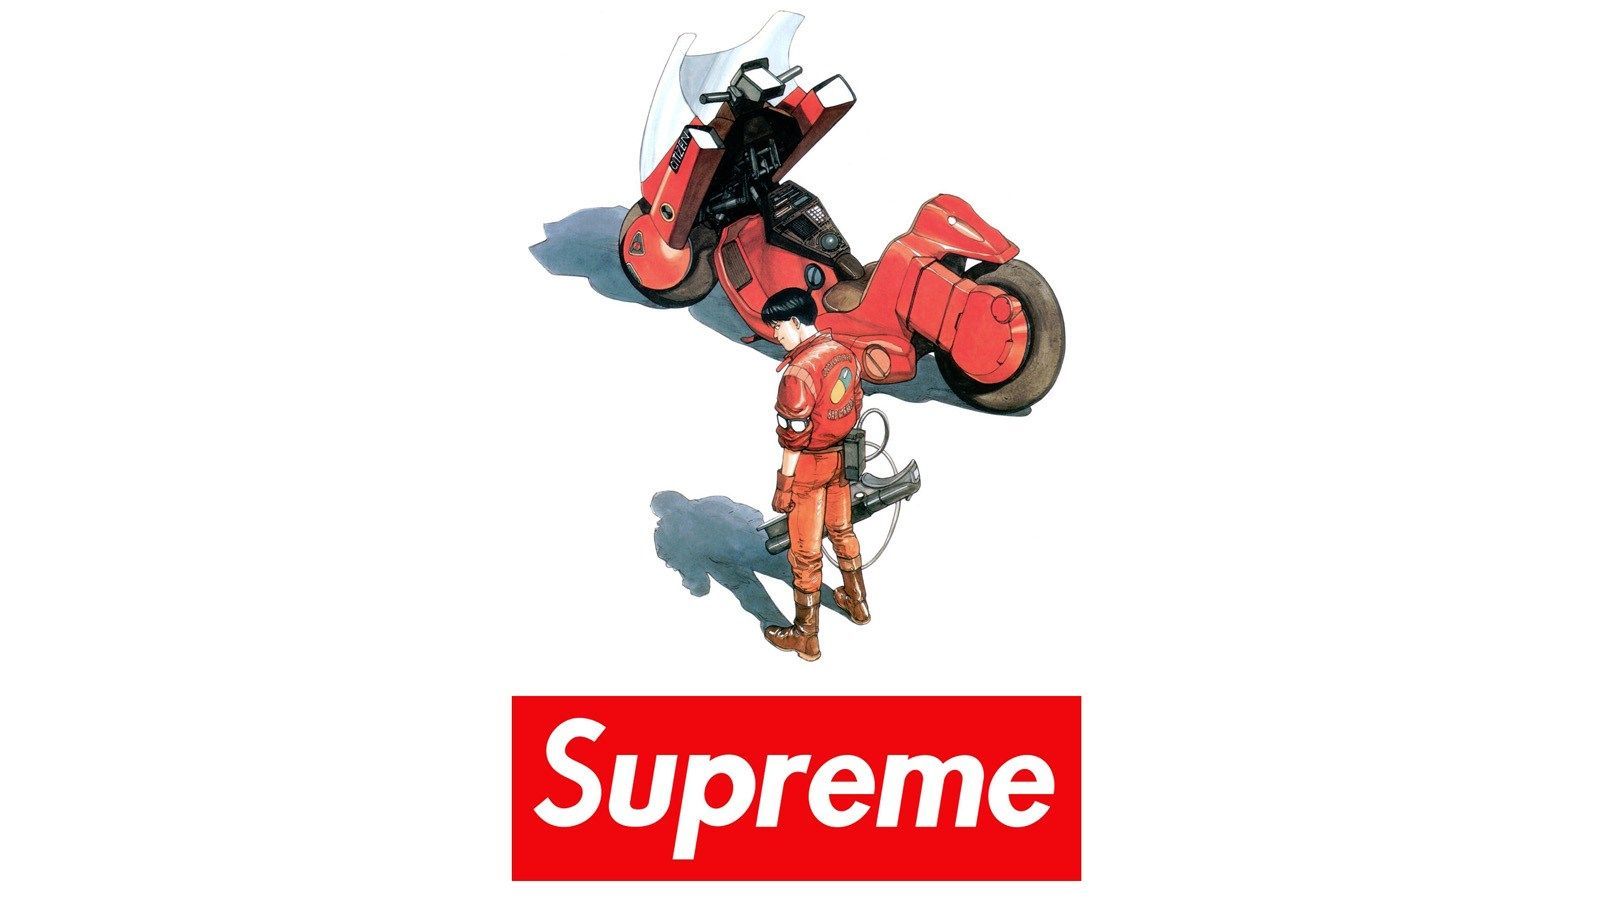 deadpool tells it himself supreme two is the best  Supreme iphone  wallpaper, Deadpool wallpaper, Supreme wallpaper